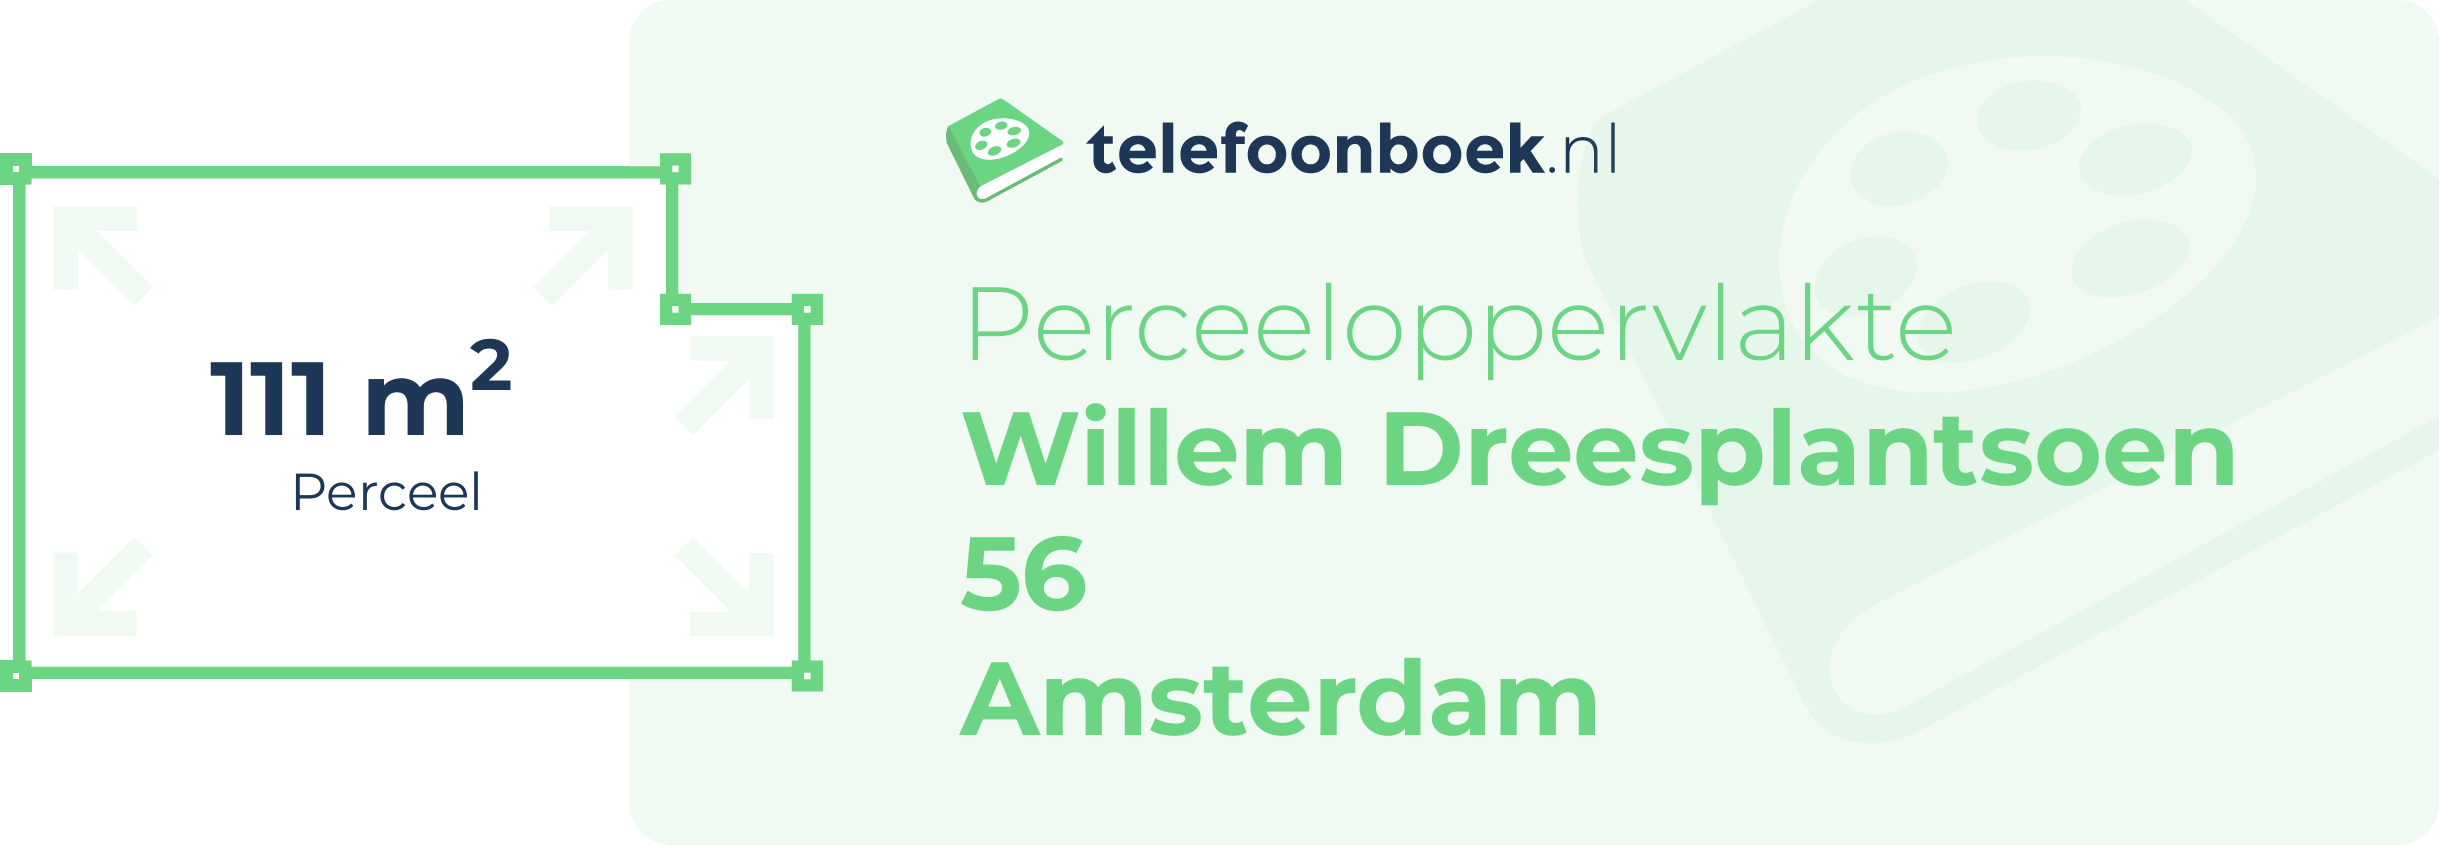 Perceeloppervlakte Willem Dreesplantsoen 56 Amsterdam